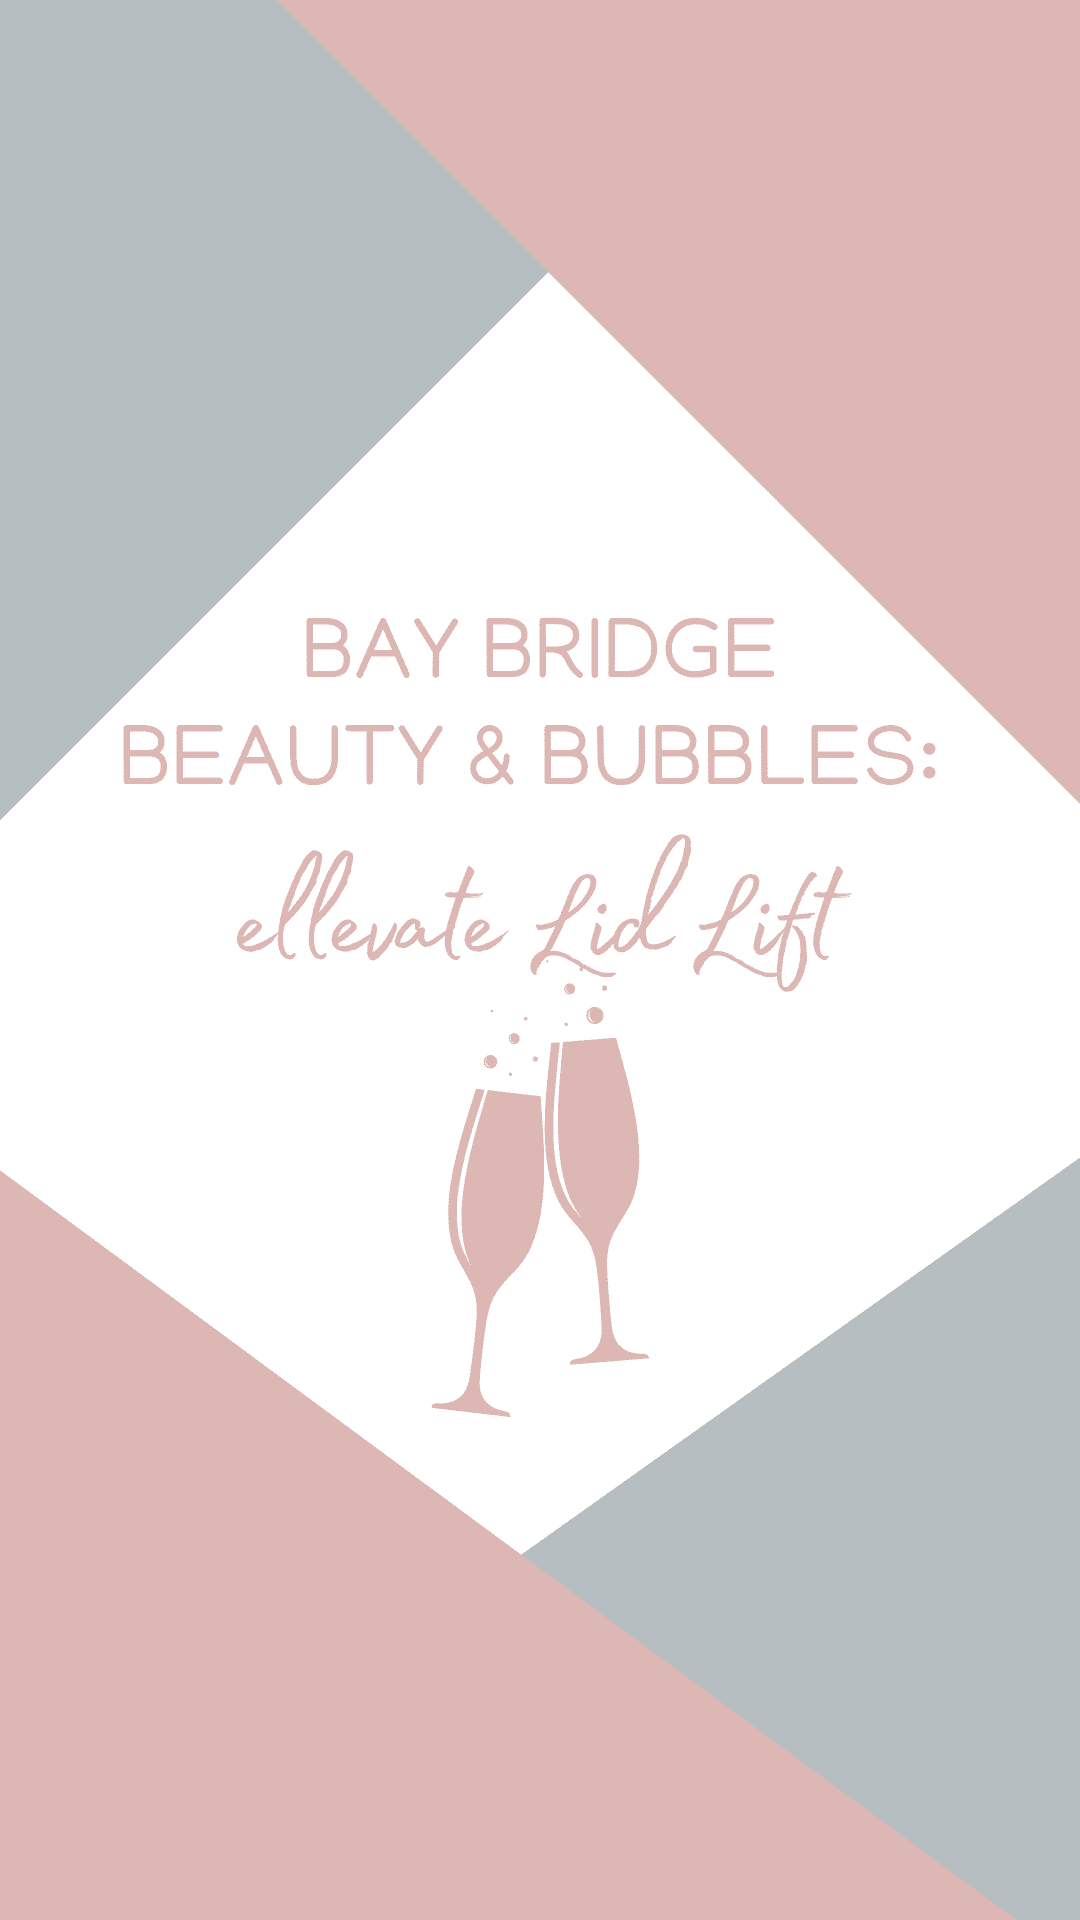 Bay Bridge Beauty & Bubbles Image